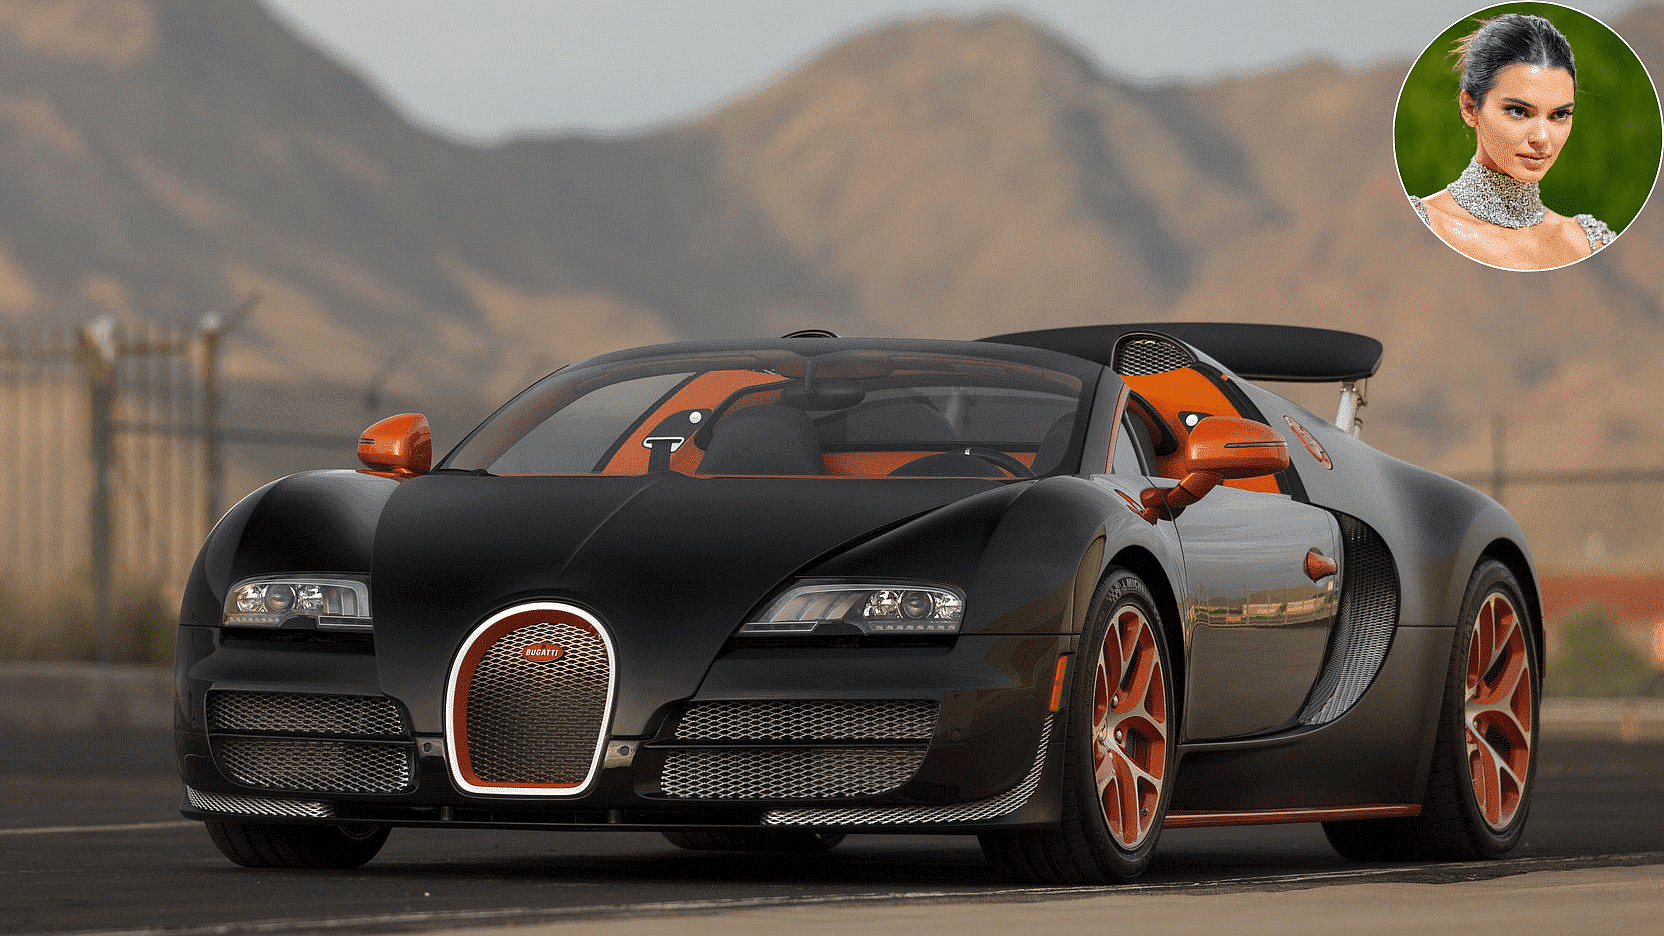 Bugatti Veyron Grand Sport Vitesse with Kendall Jenner